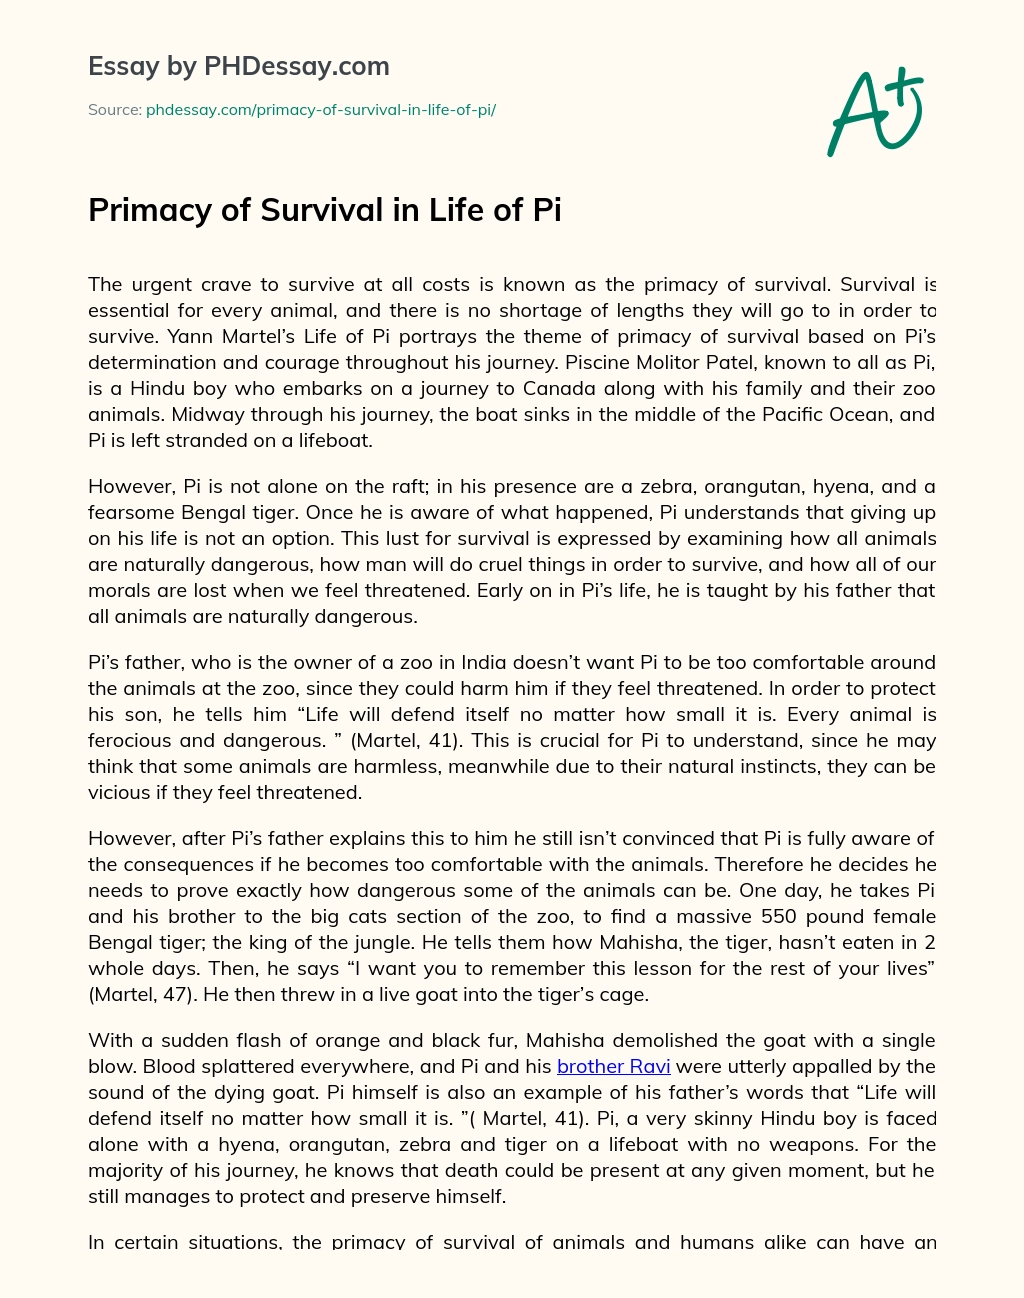 Primacy of Survival in Life of Pi essay